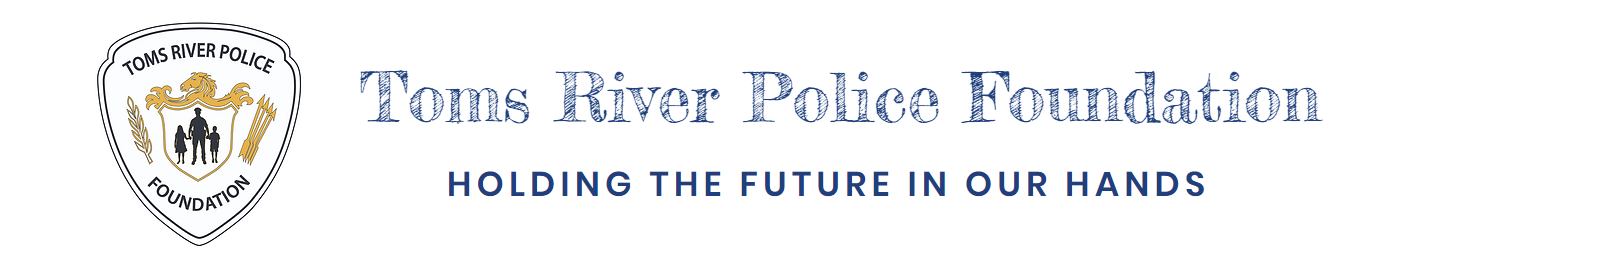 Toms River Police Foundation